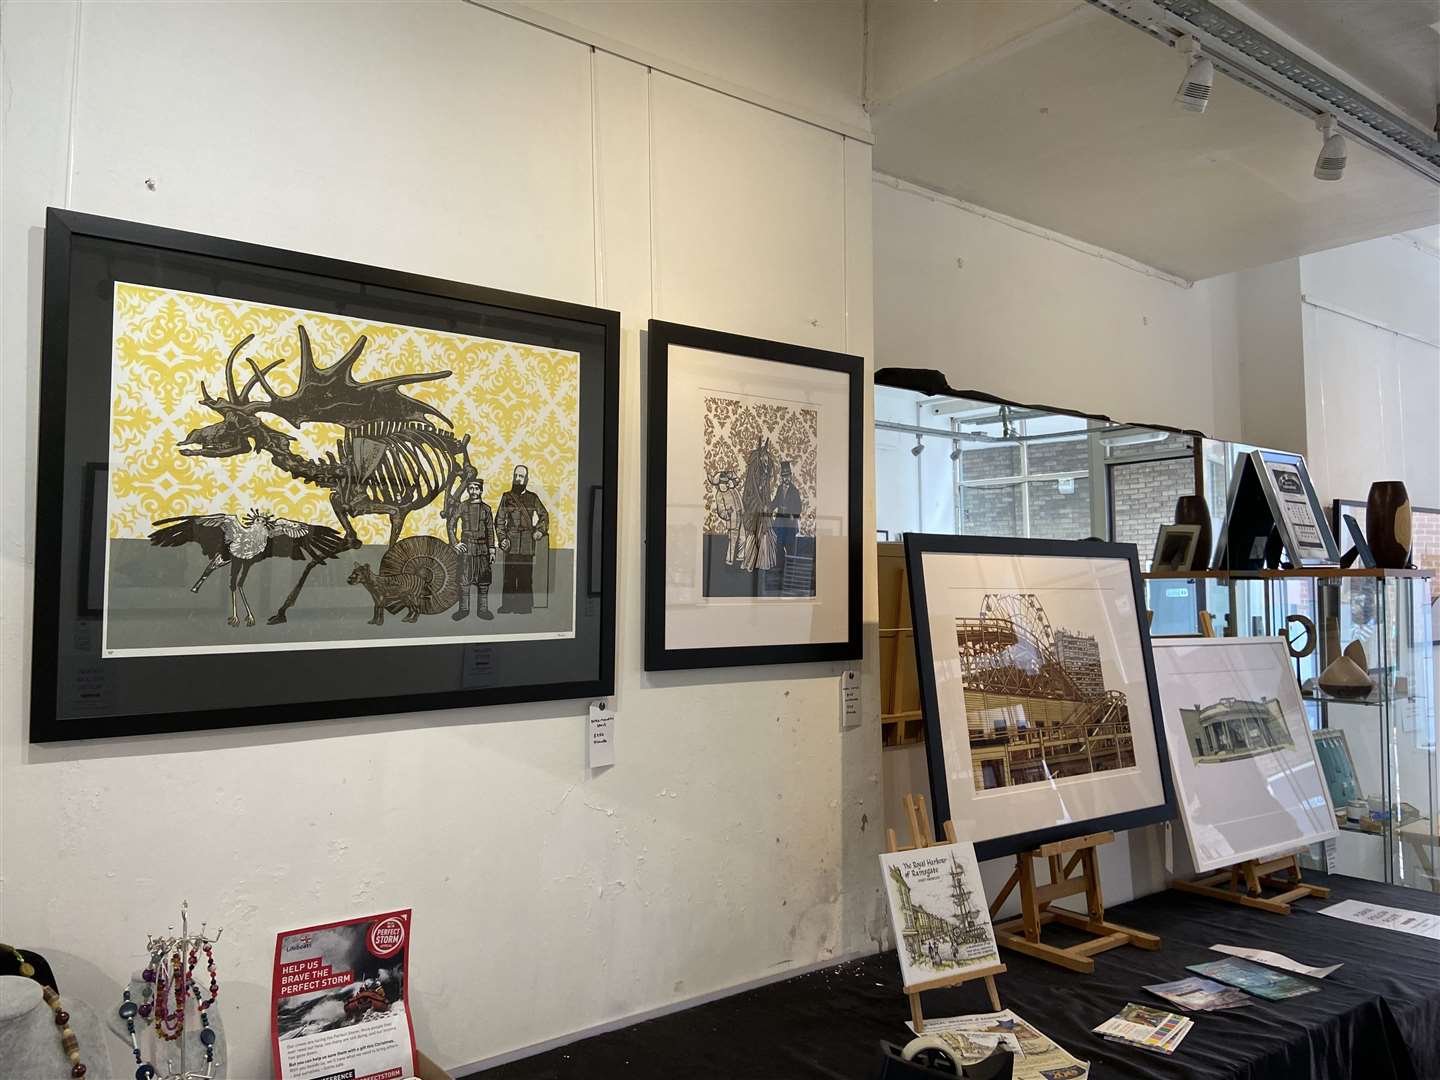 York Street Gallery in Ramsate, run by Mike Samson